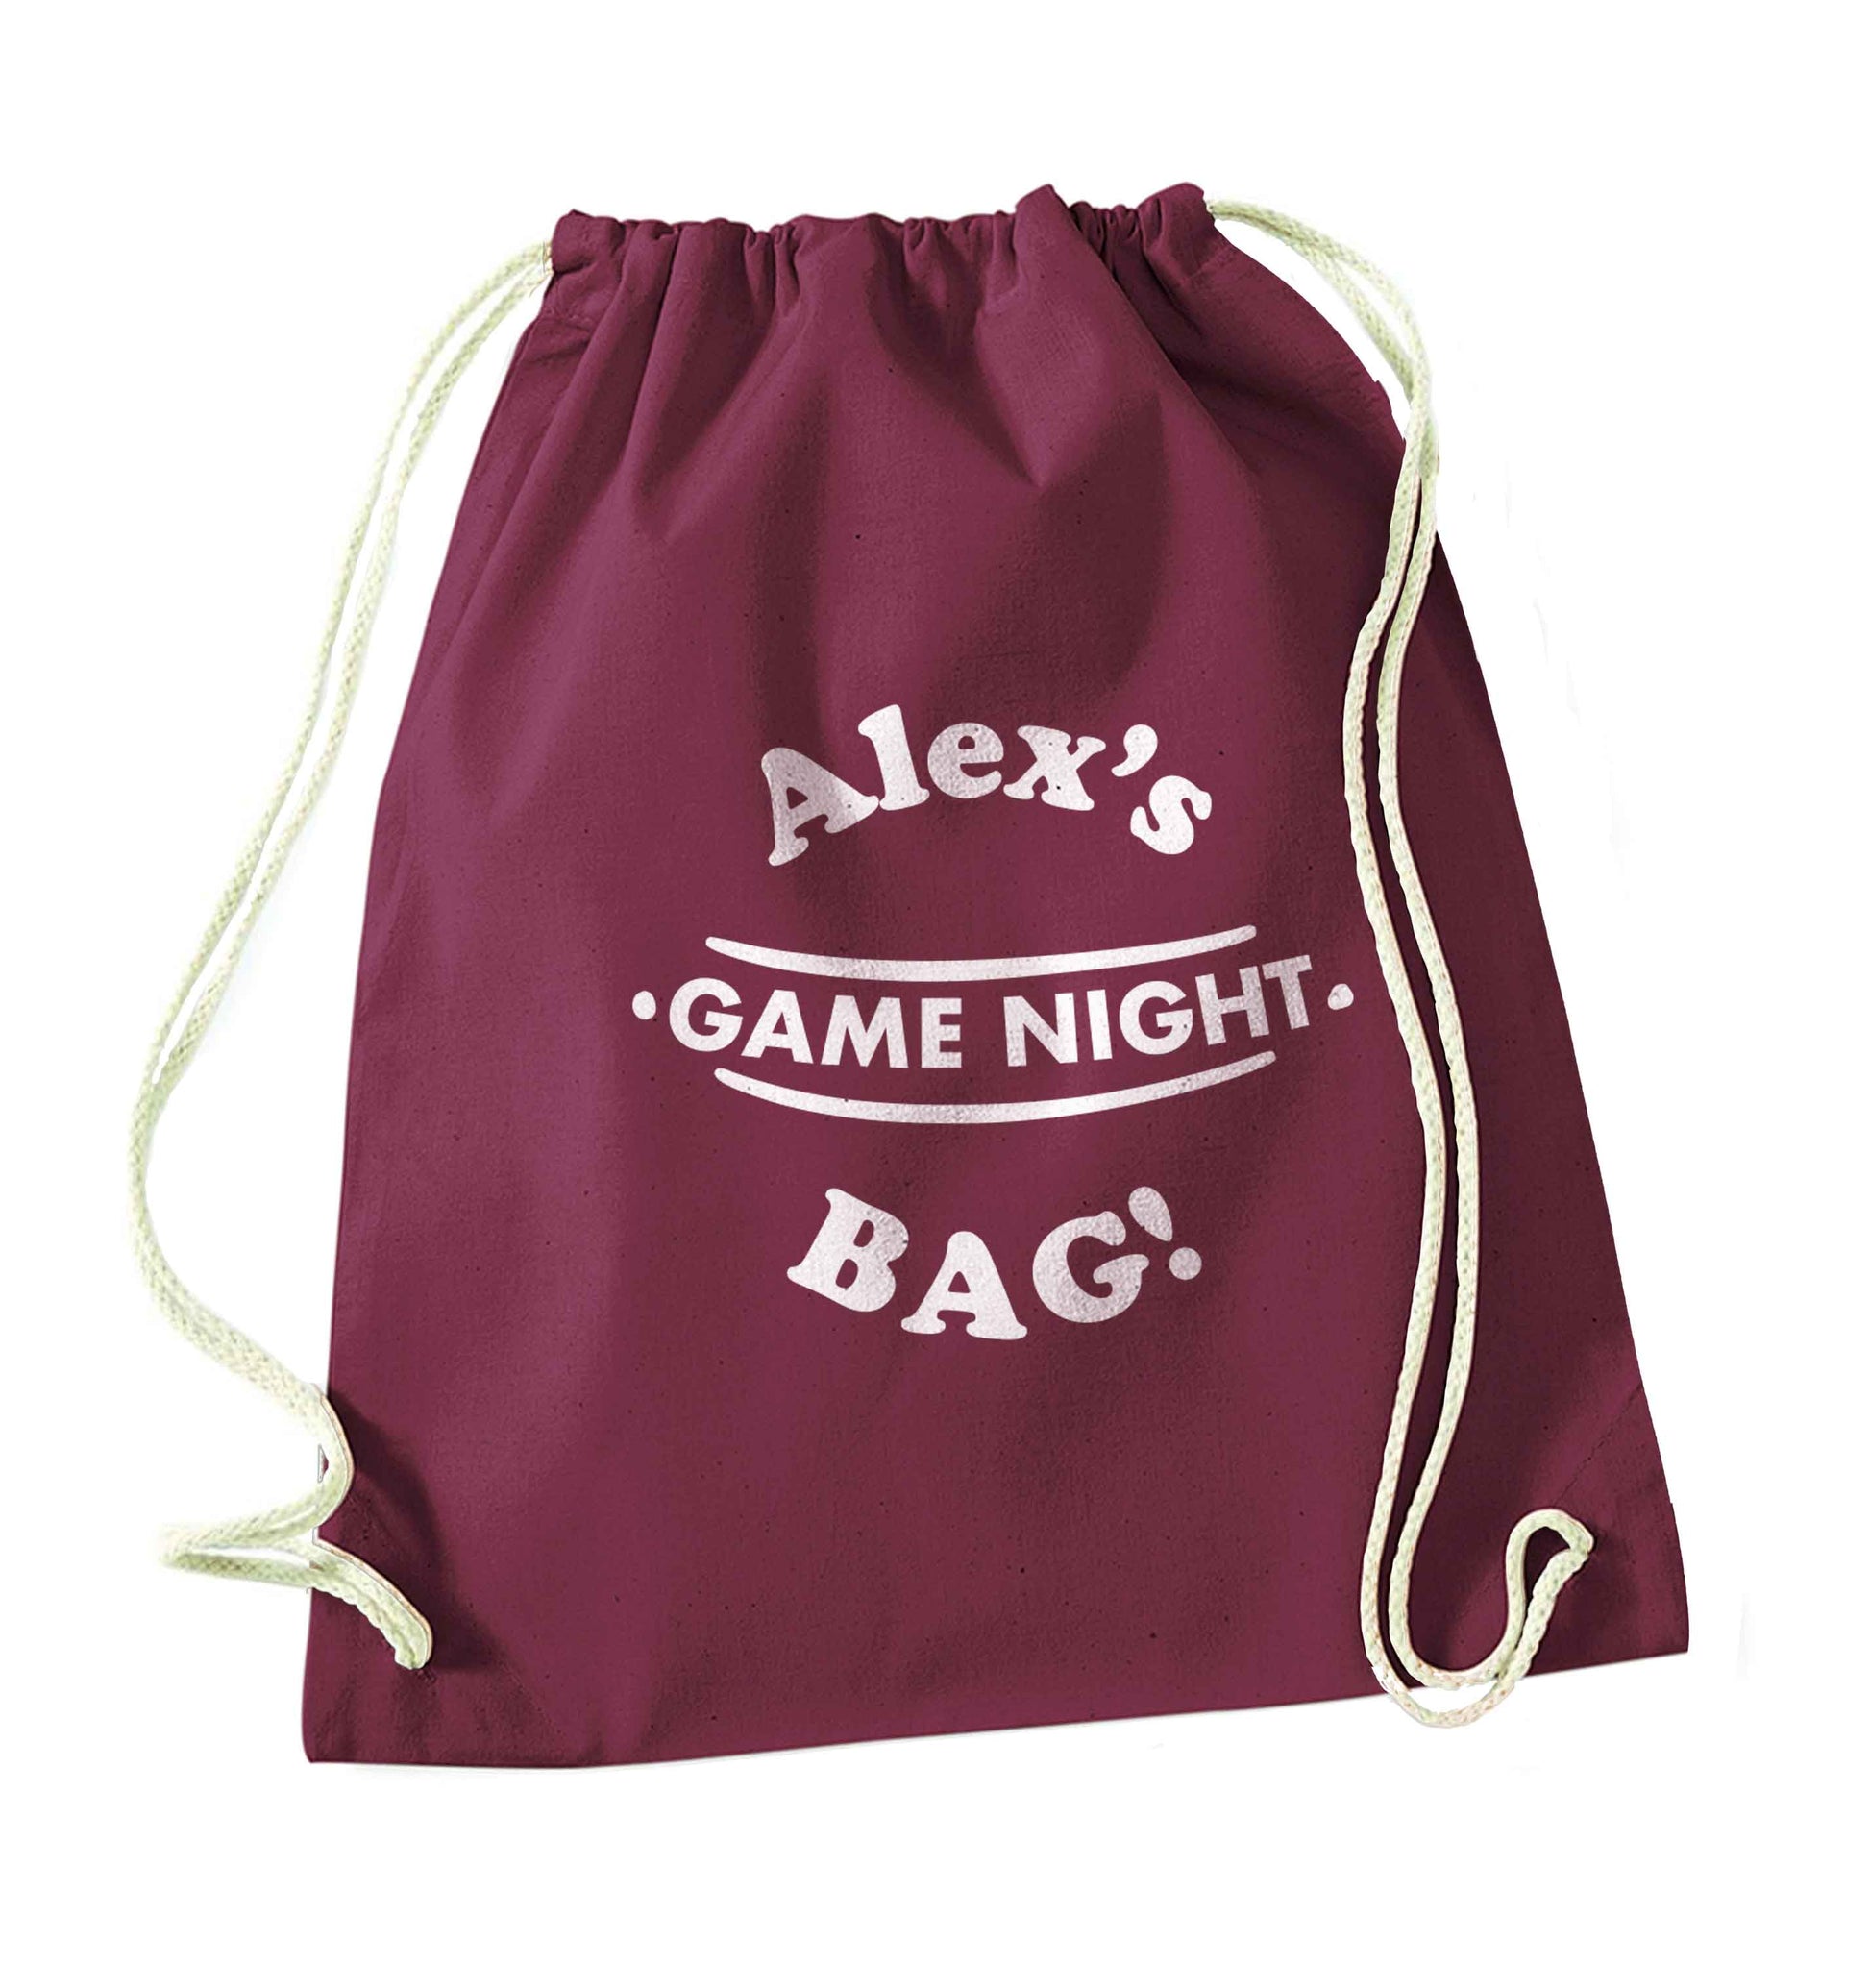 Personalised game night bag maroon drawstring bag